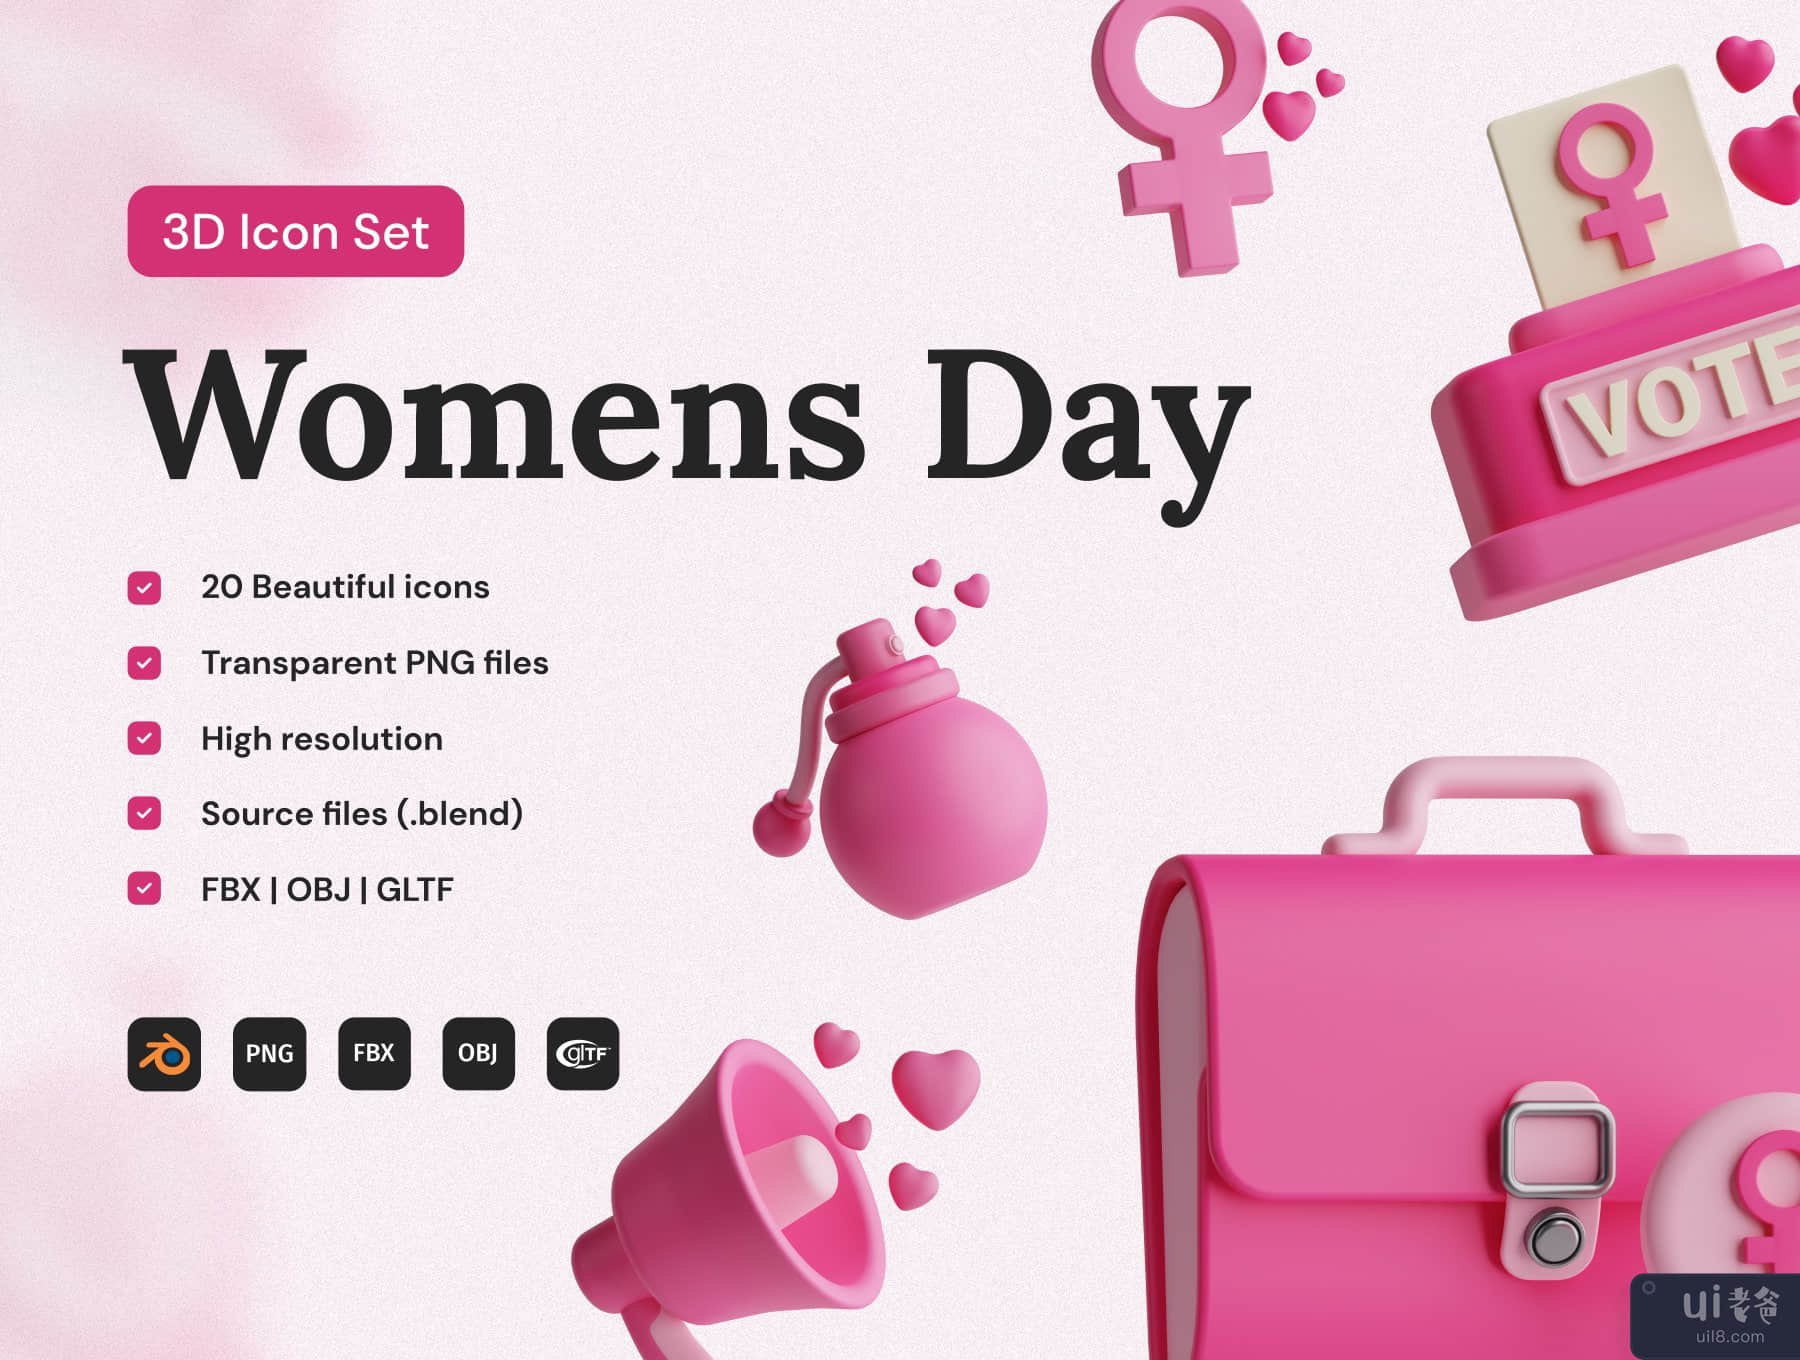 妇女节 3D 图标集 (Women's Day 3D Icon Set)插图7